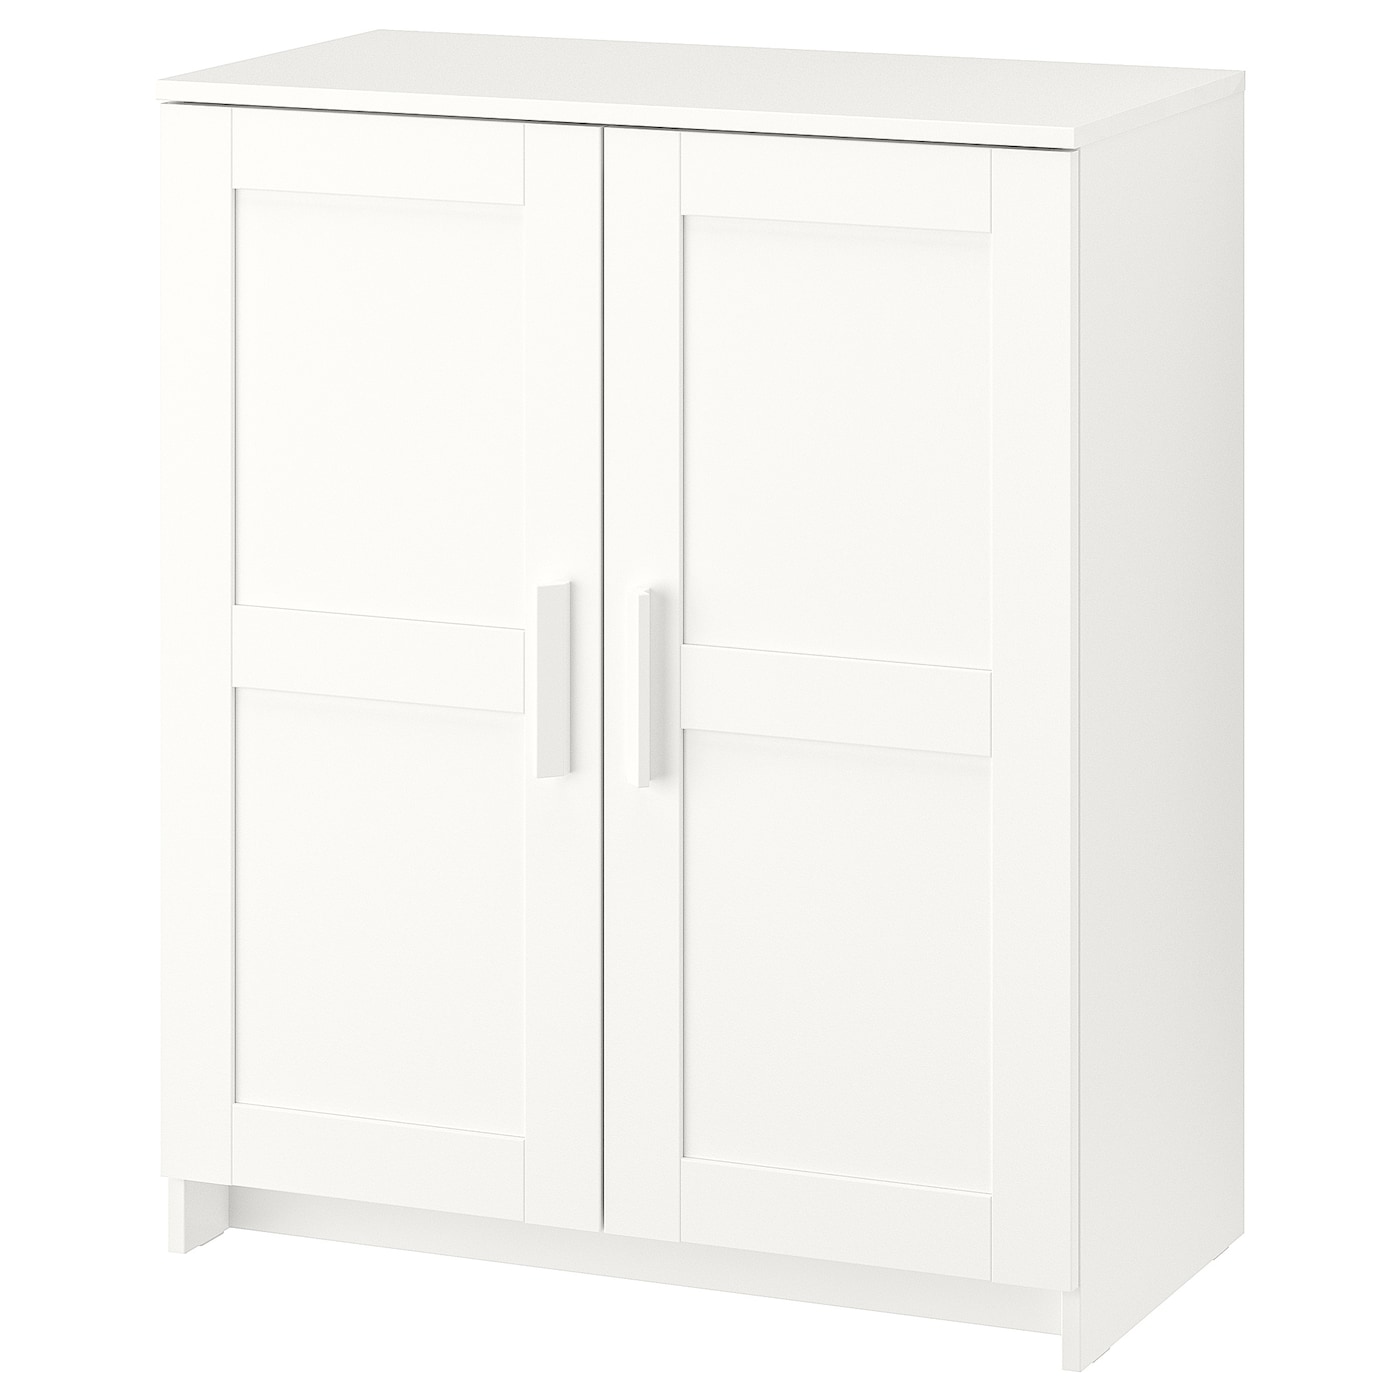 Шкаф с 2 дверями - IKEA BRIMNES, 78х95 см, белый, БРИМНЕС ИКЕА